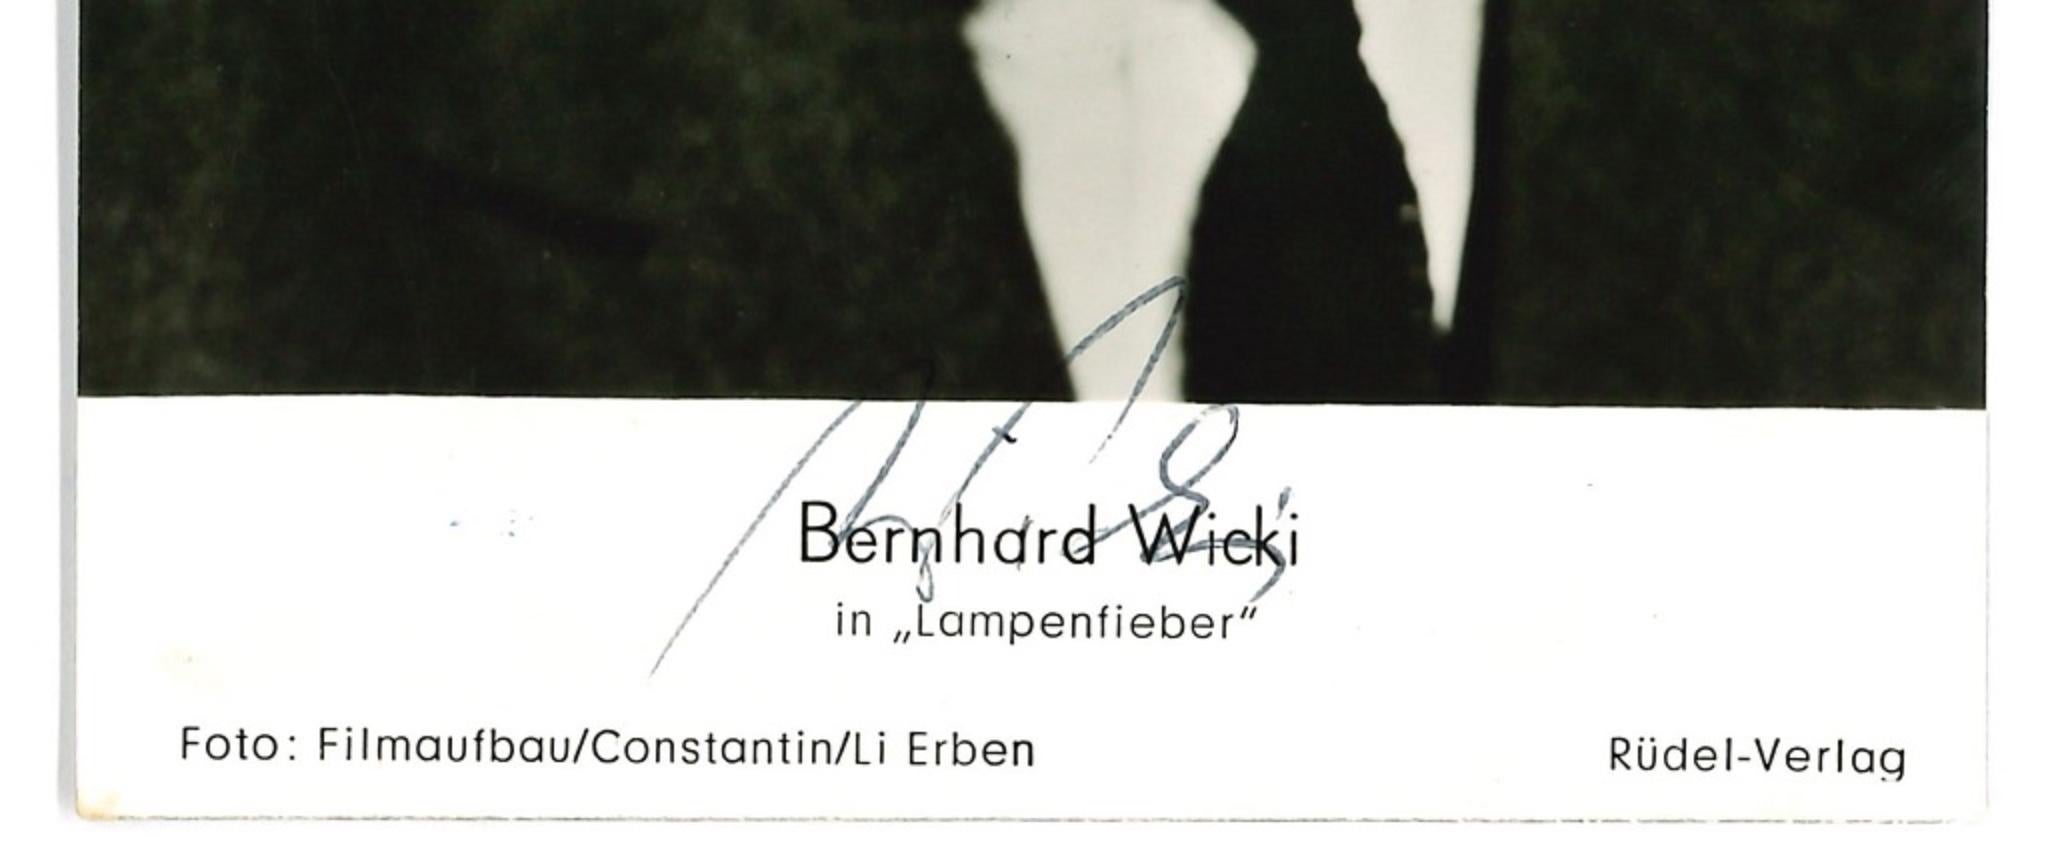 Autographed Portrait of Bernhard Wicki - Vintage b/w Postcard - 1950s - Photograph by Unknown